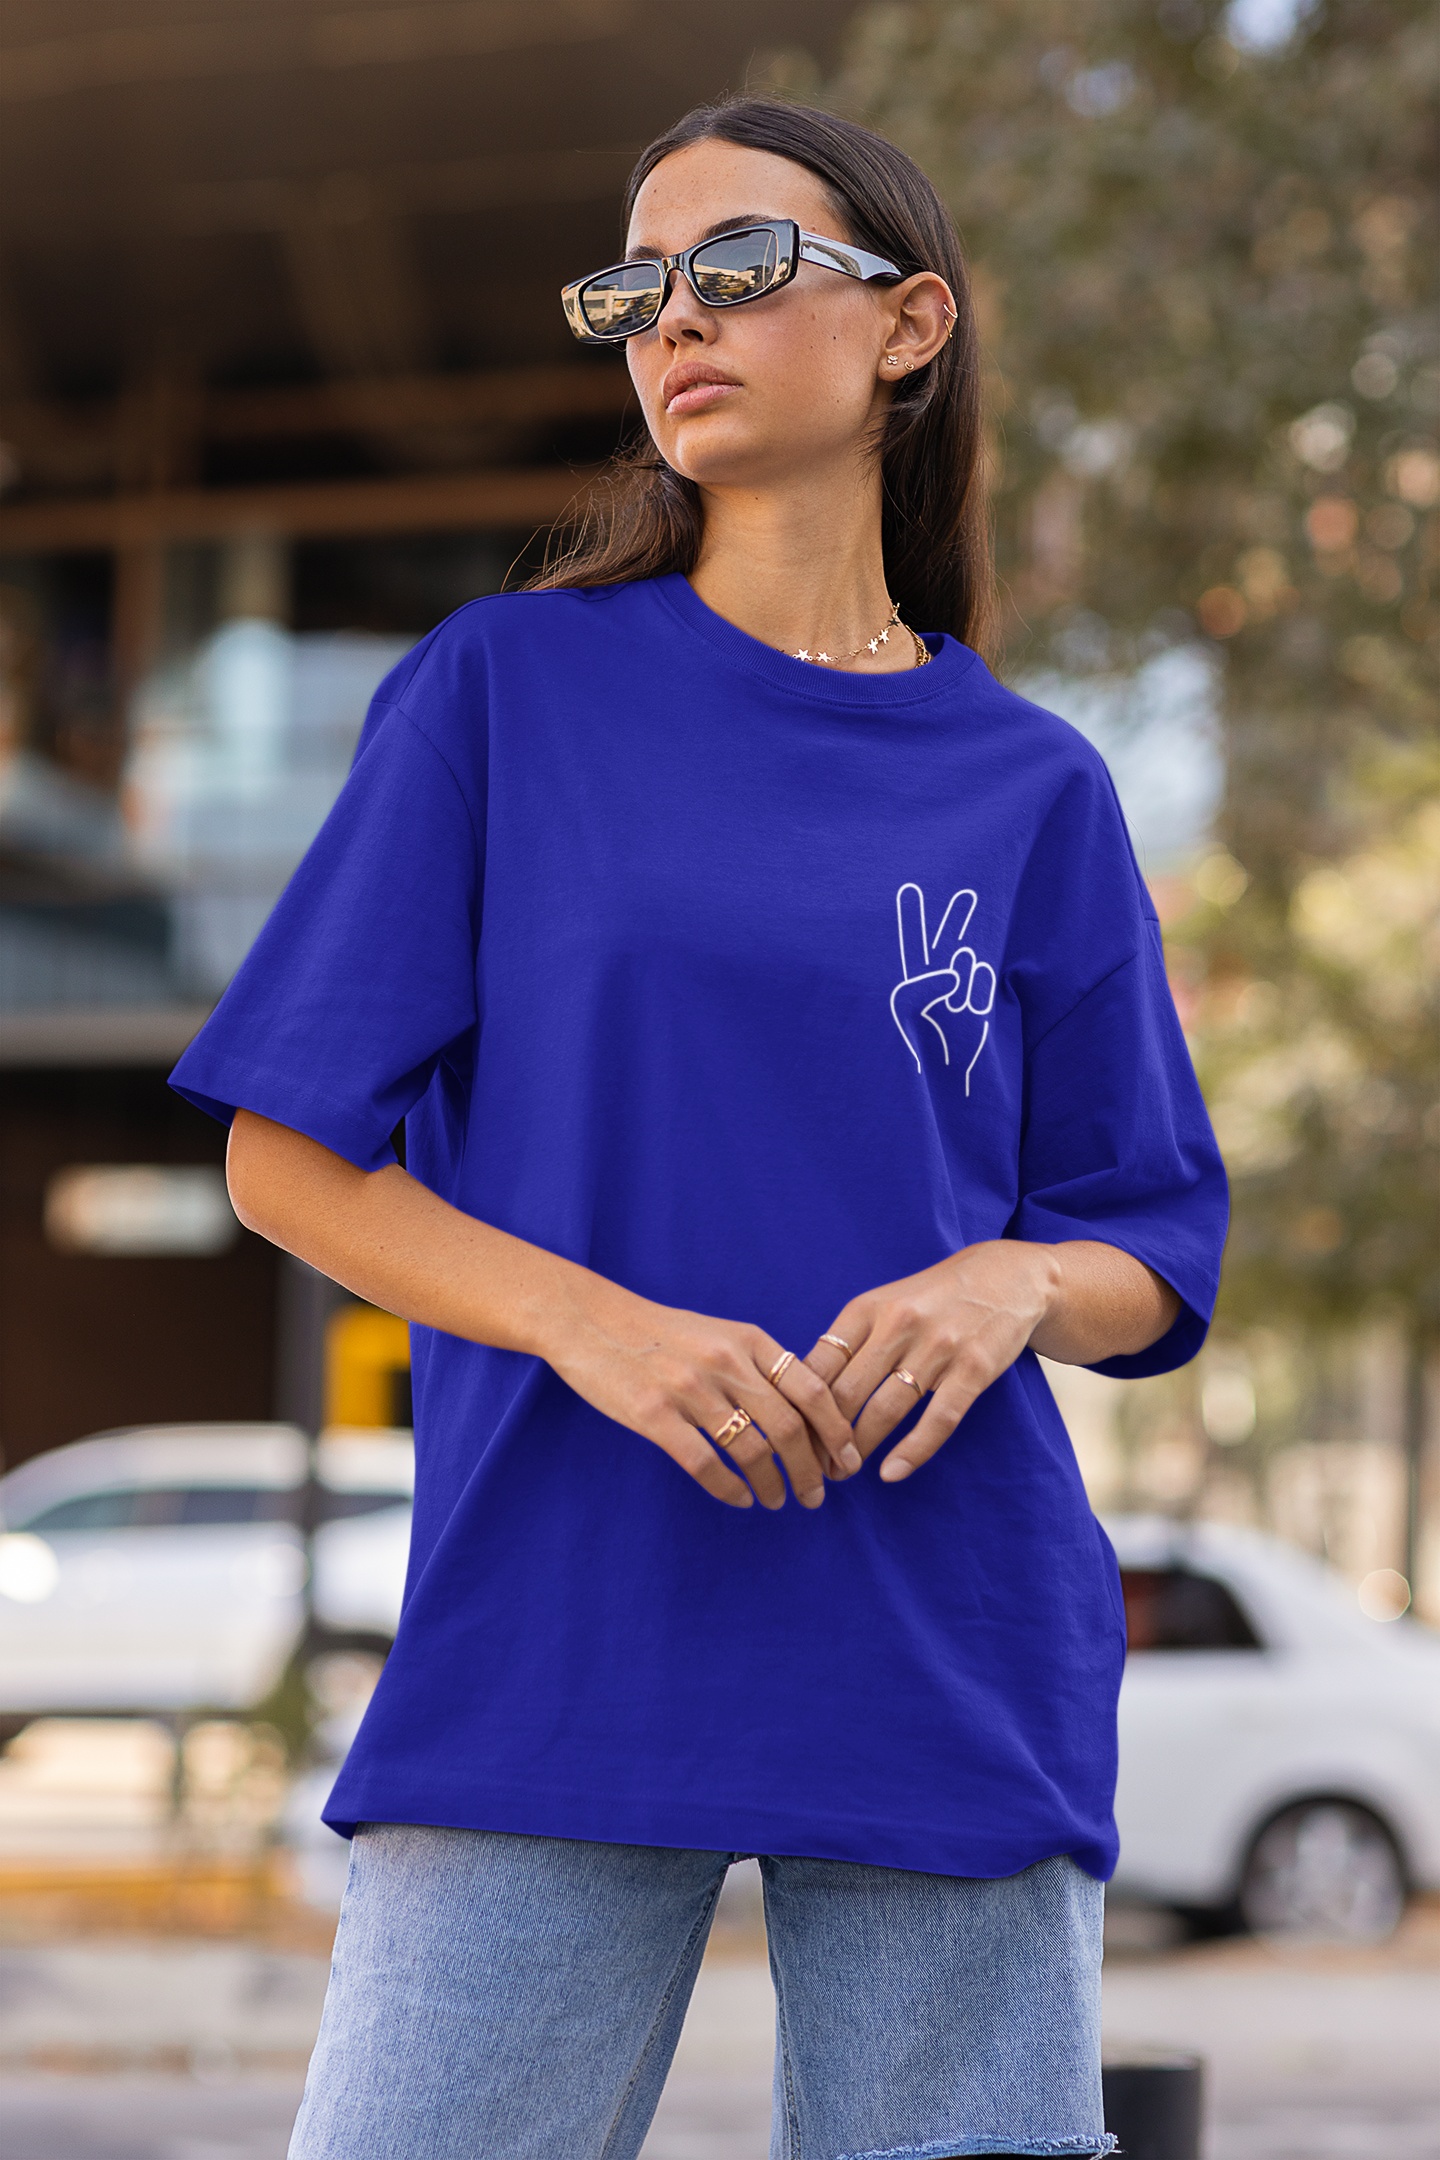 Peace | Premium Oversized Half Sleeve Unisex T-Shirt